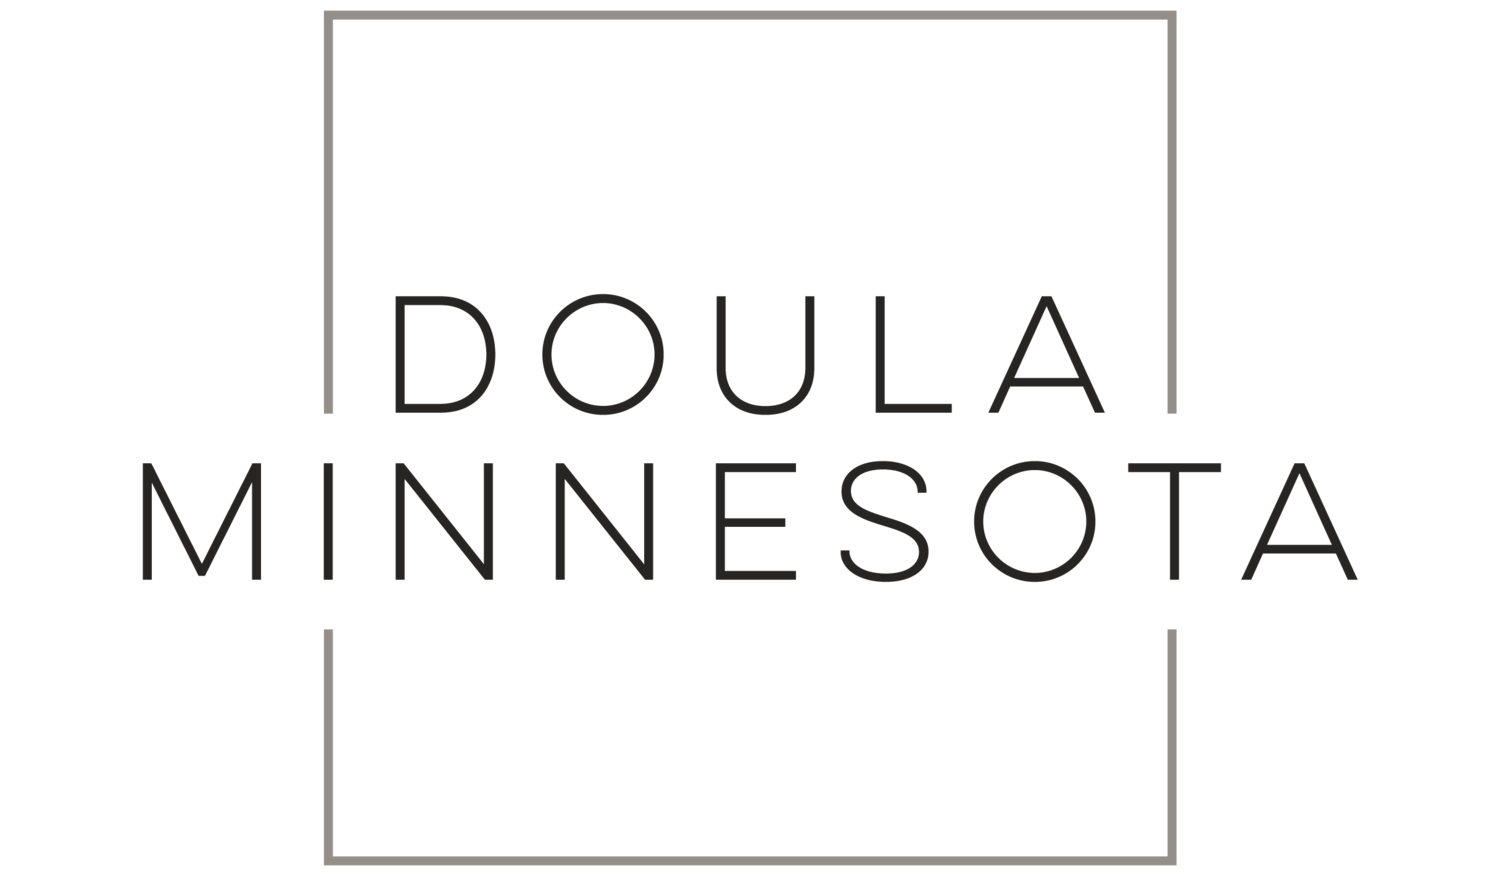 Doula Minnesota